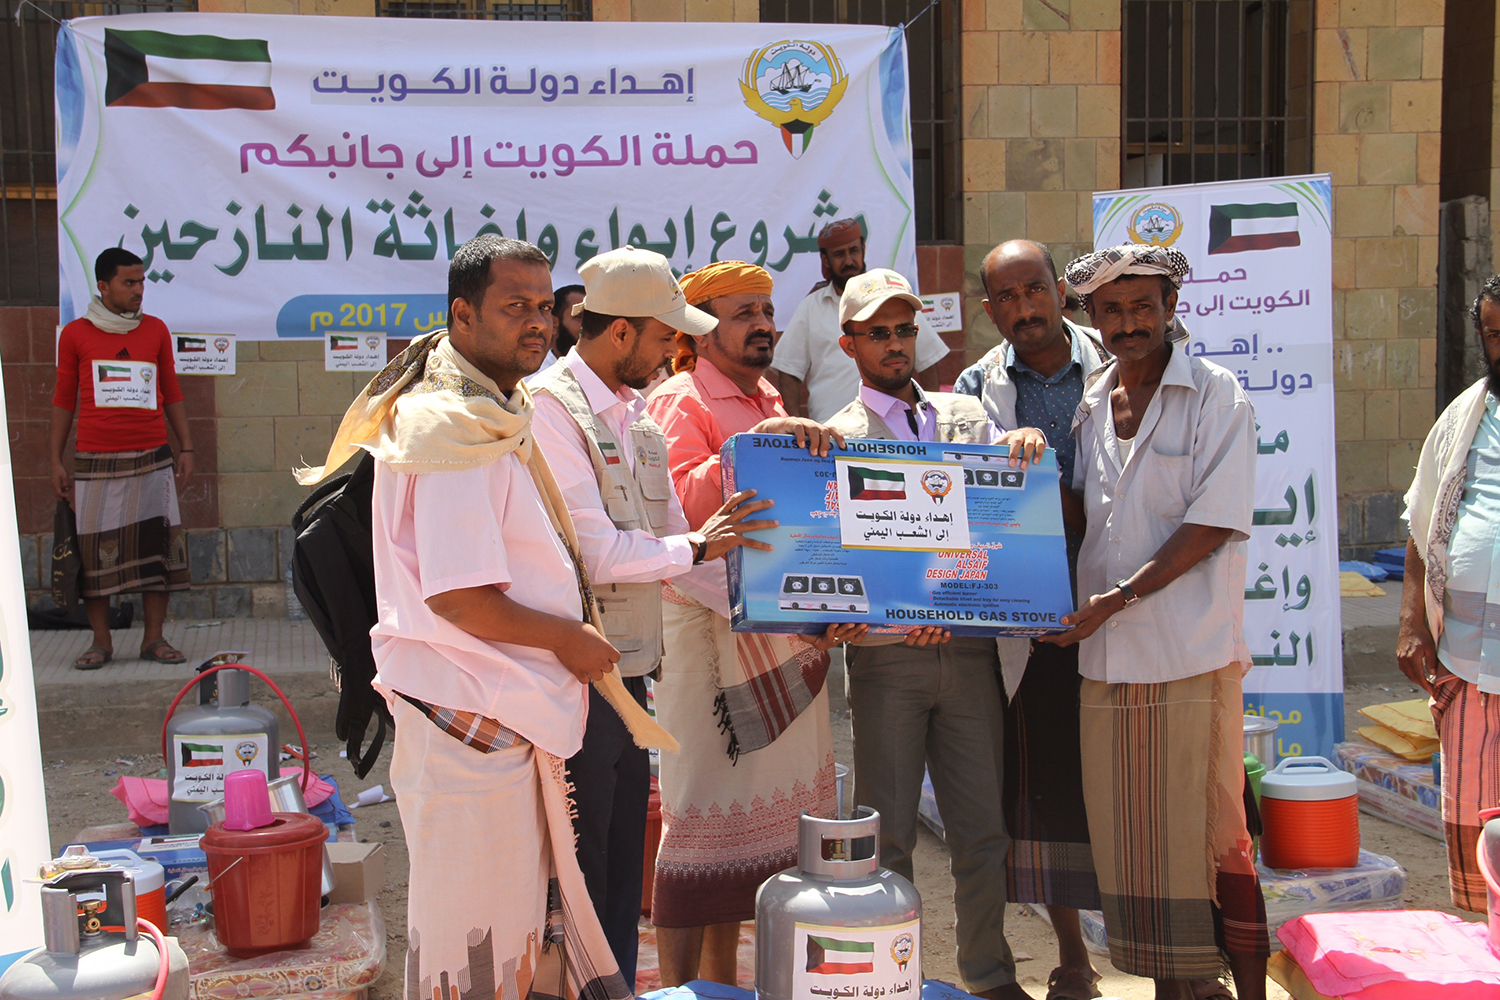 Kuwait distributes shelter aid to IDPs in Yemen